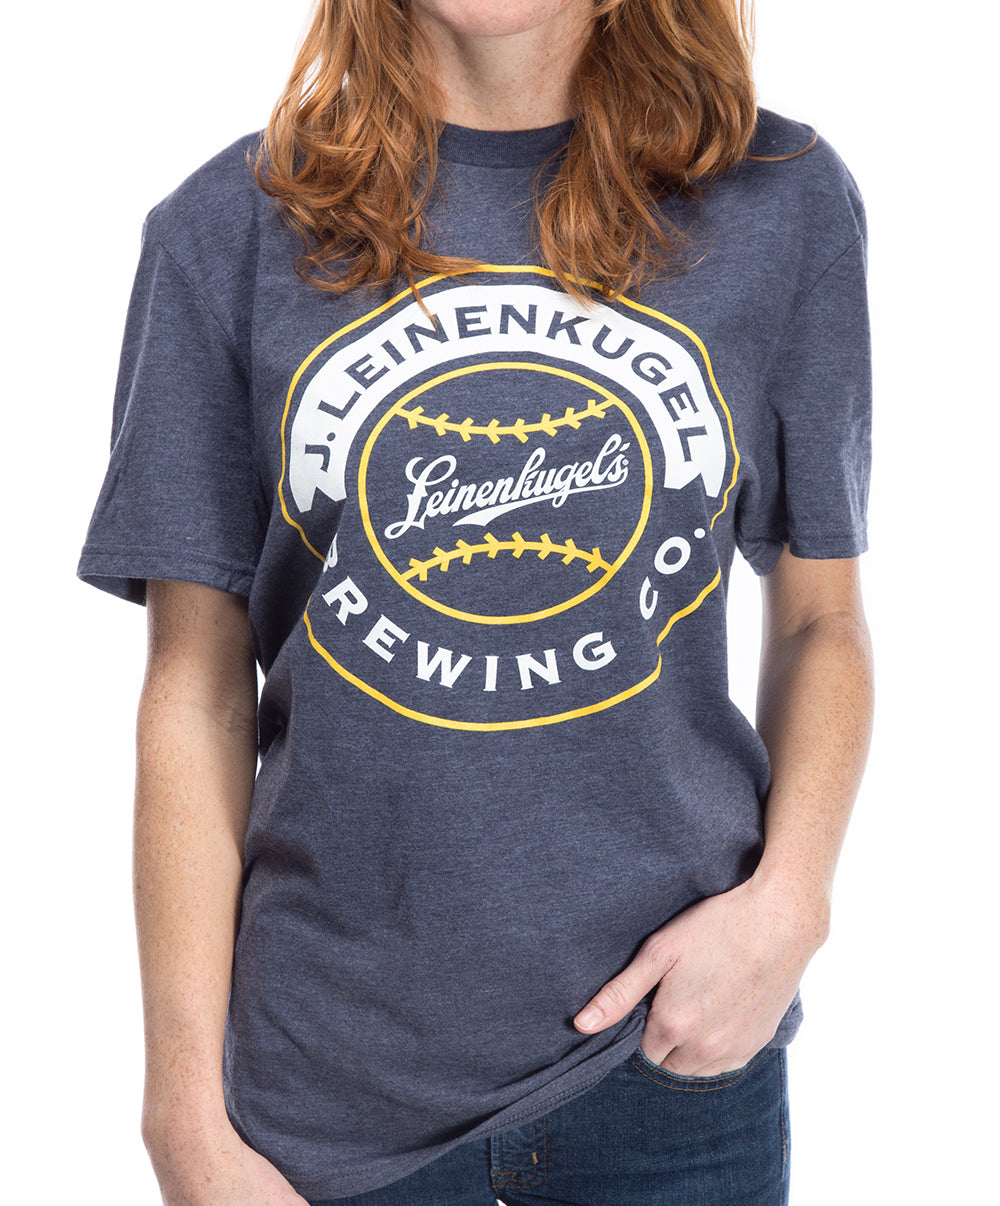 Wheat Leinenkugel Beer Baseball Jersey Shirt - Freedomdesign